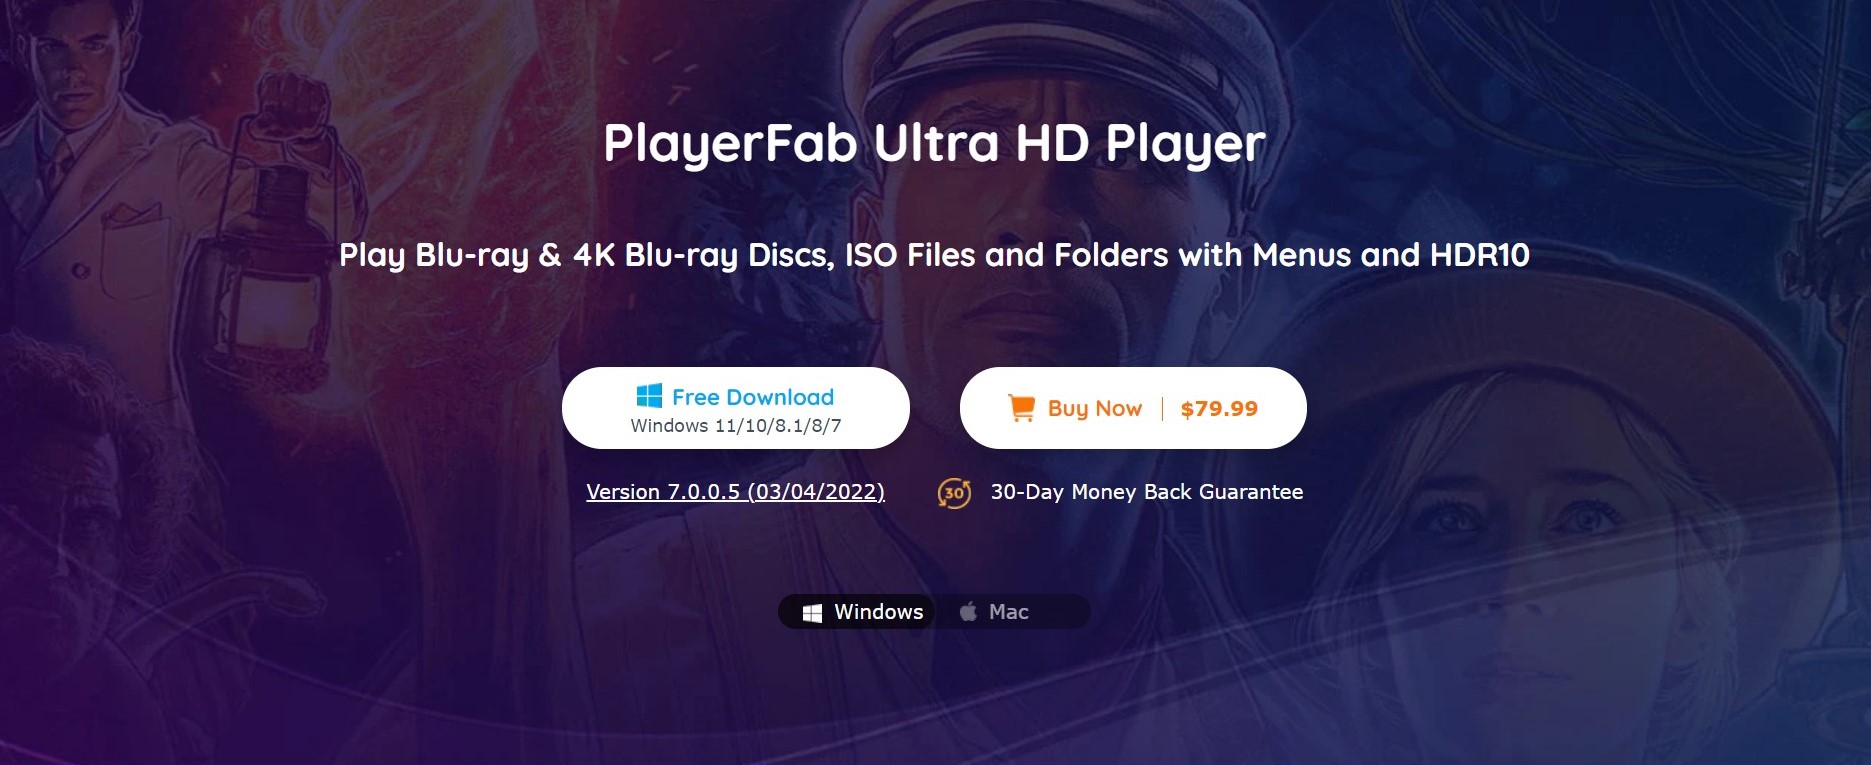 Free 4K Blu-ray Player - Download